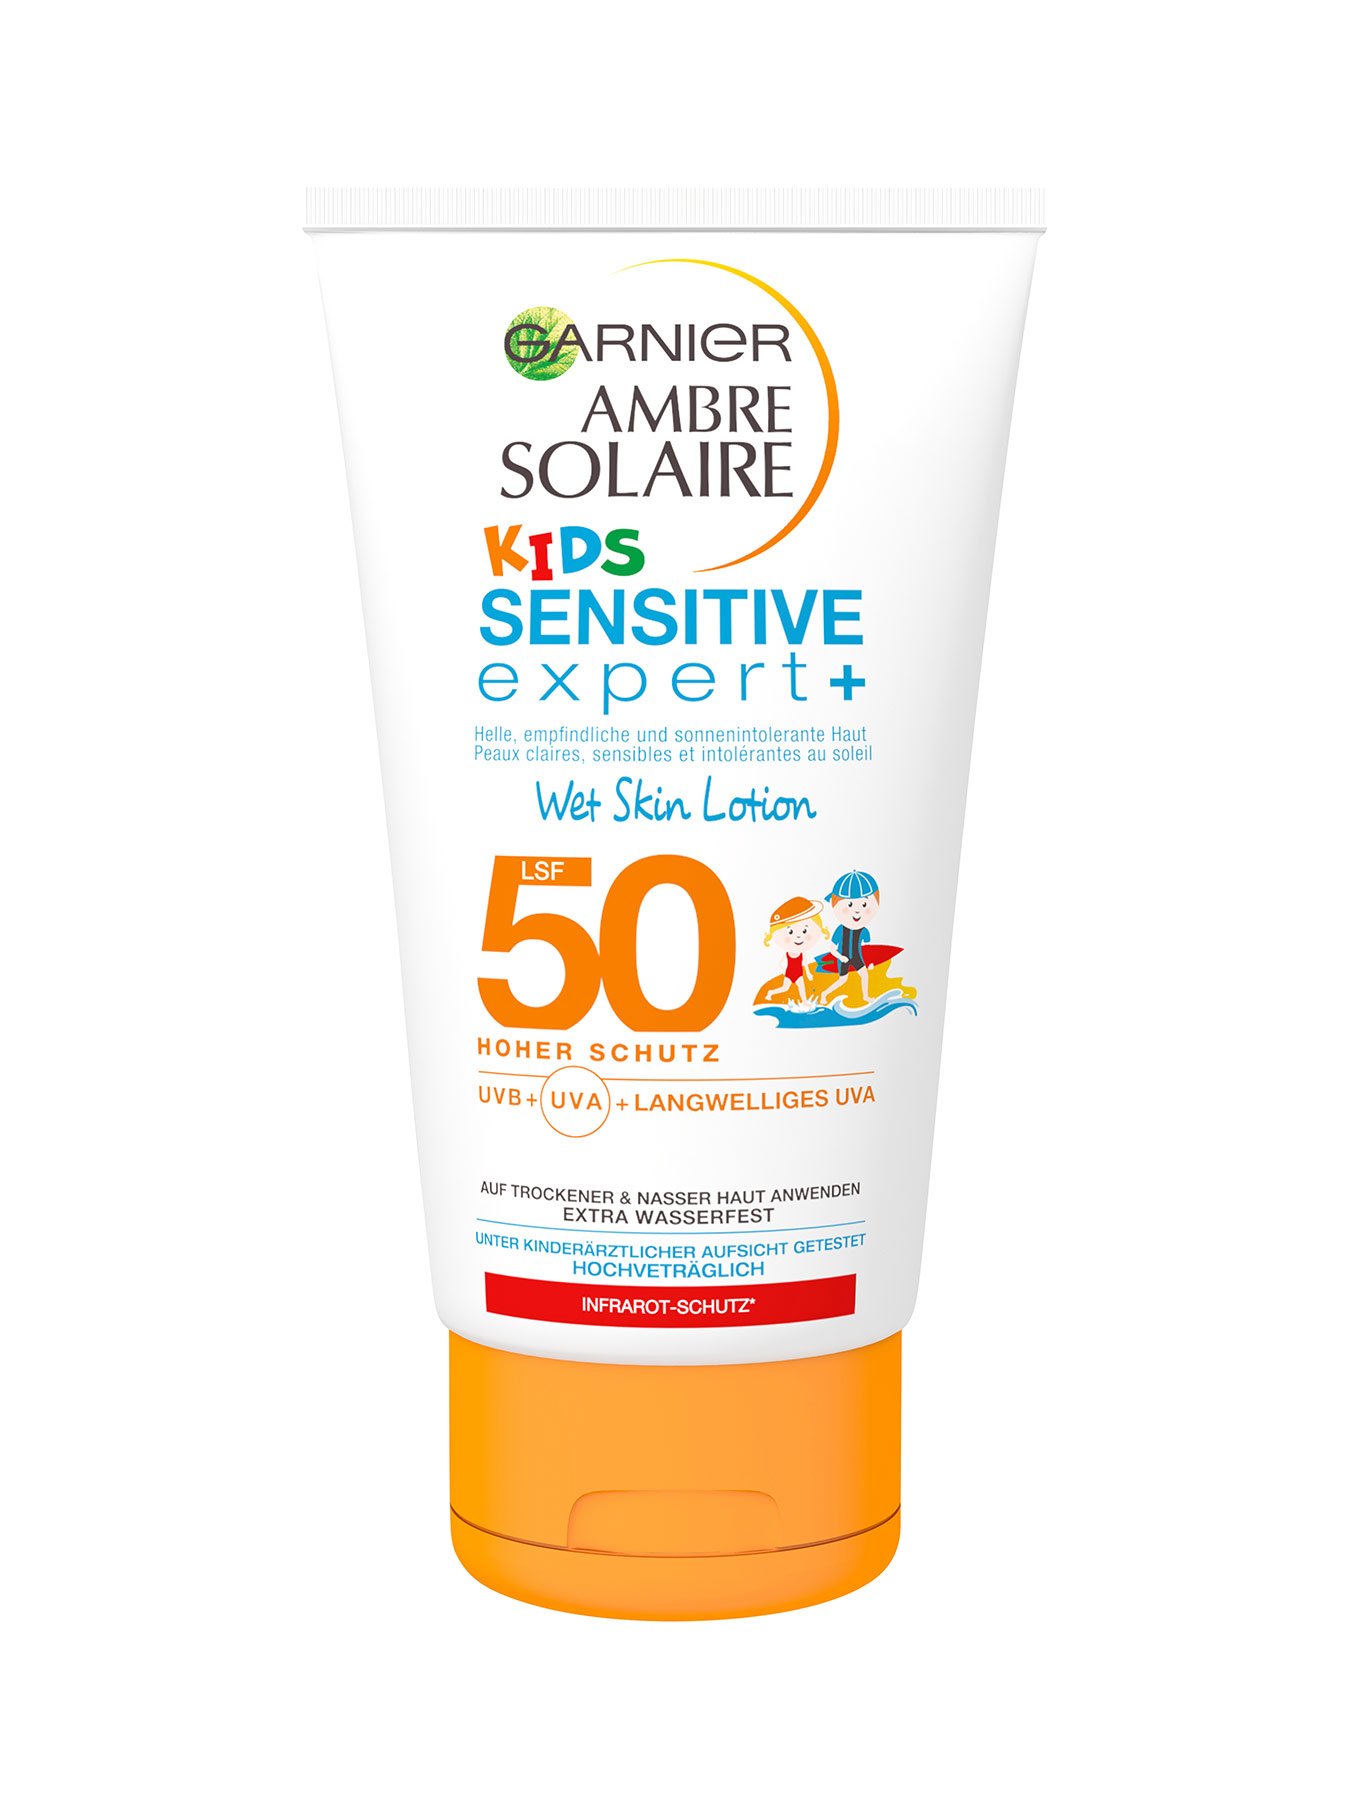 Kids Sensitive expert+ Lait Wet Skin Lotion FPS 50 | Garnier